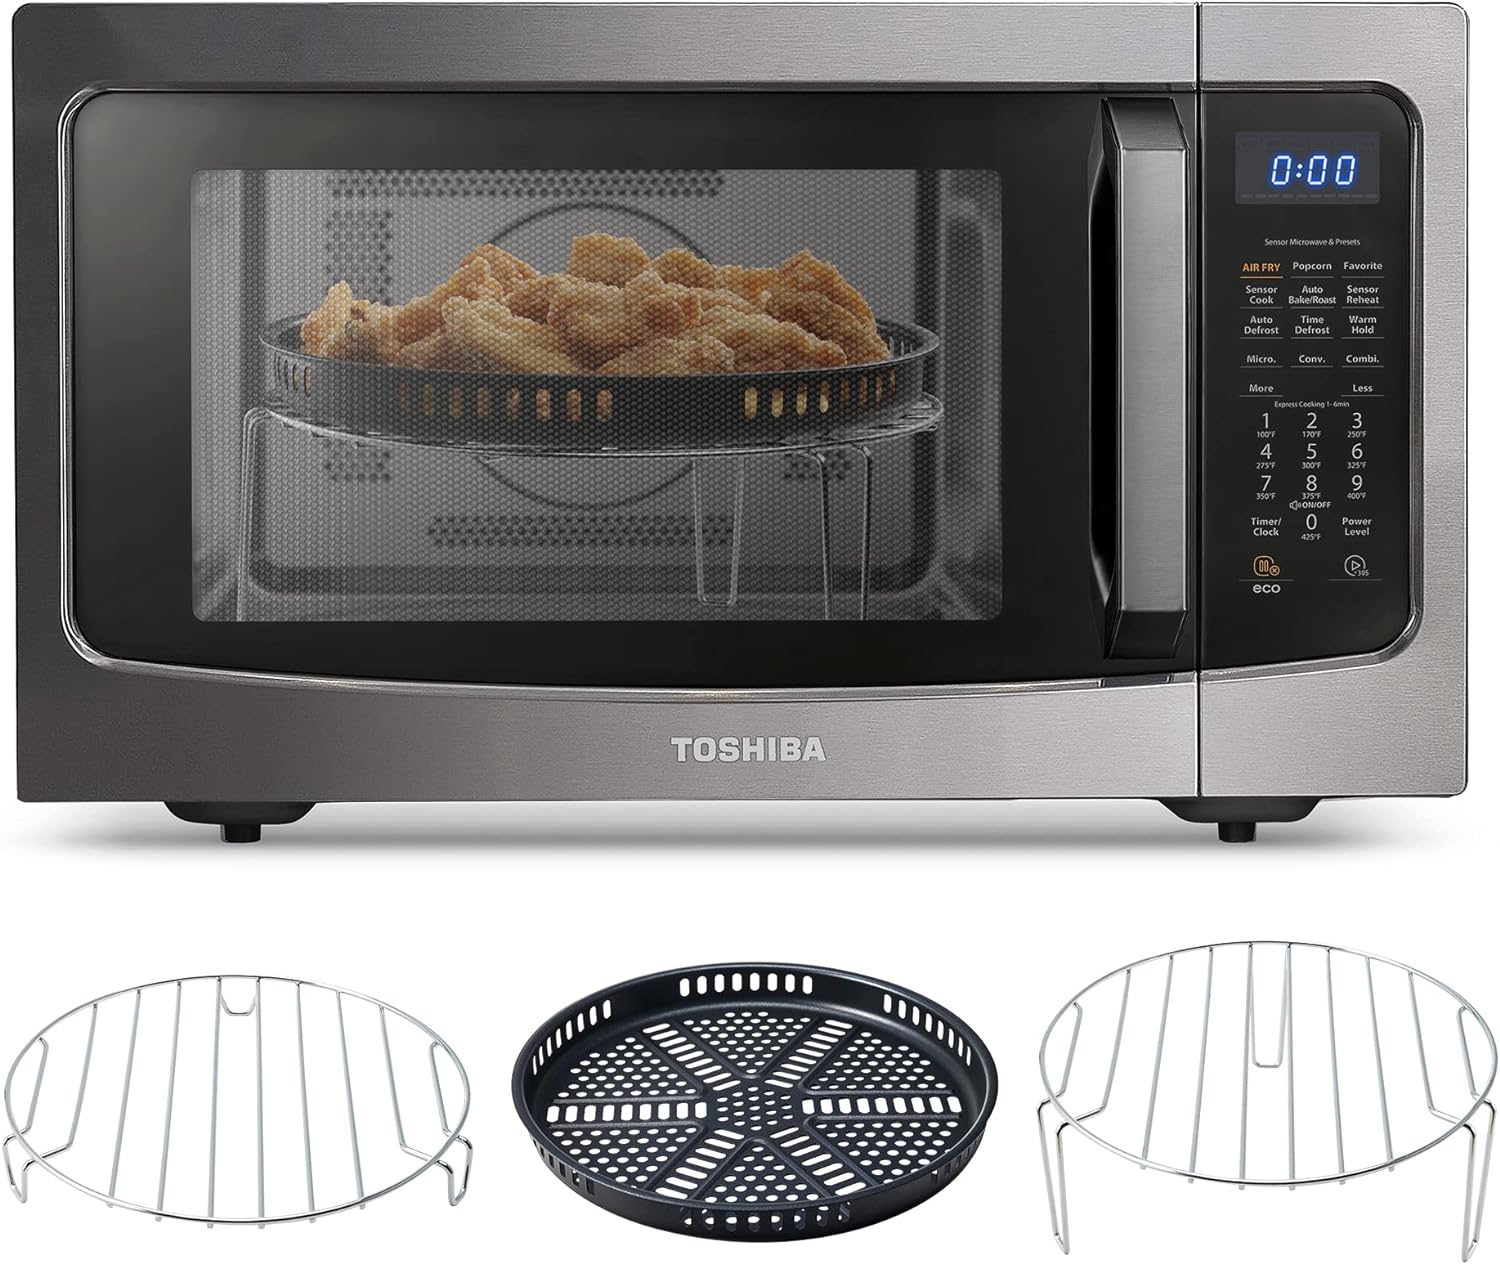 TOSHIBA 4-in-1 ML-EC42P(BS) Countertop Microwave Oven